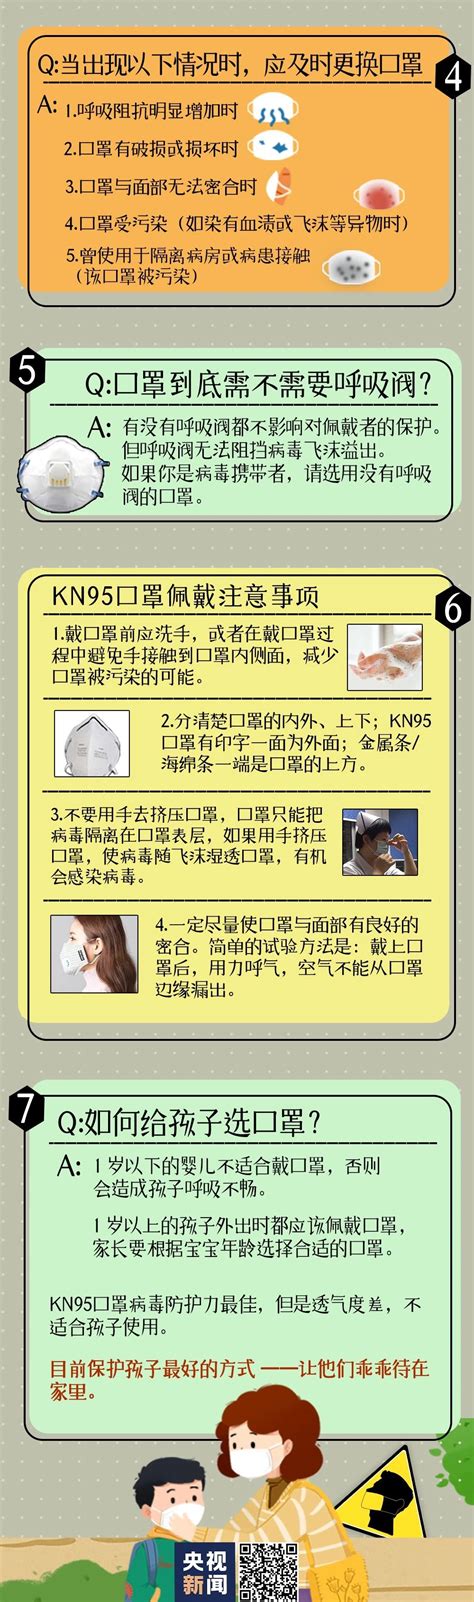 KN95和N95口罩有区别吗？KN95口罩能否用于一线防护？|医护人员|外科_新浪科技_新浪网